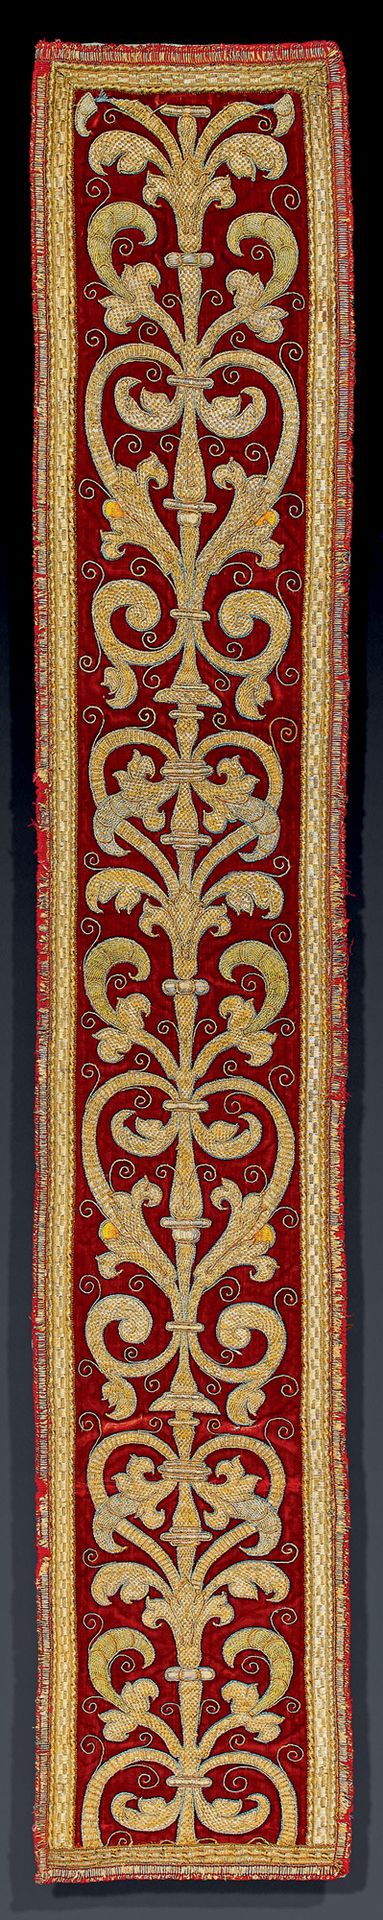 Null 绣花头巾，意大利或西班牙，约1570-1580年。 美丽的烛台图案，由刺绣卷轴和细卷轴组成，用金银金属线的couchure、guipure和gaufr&hellip;